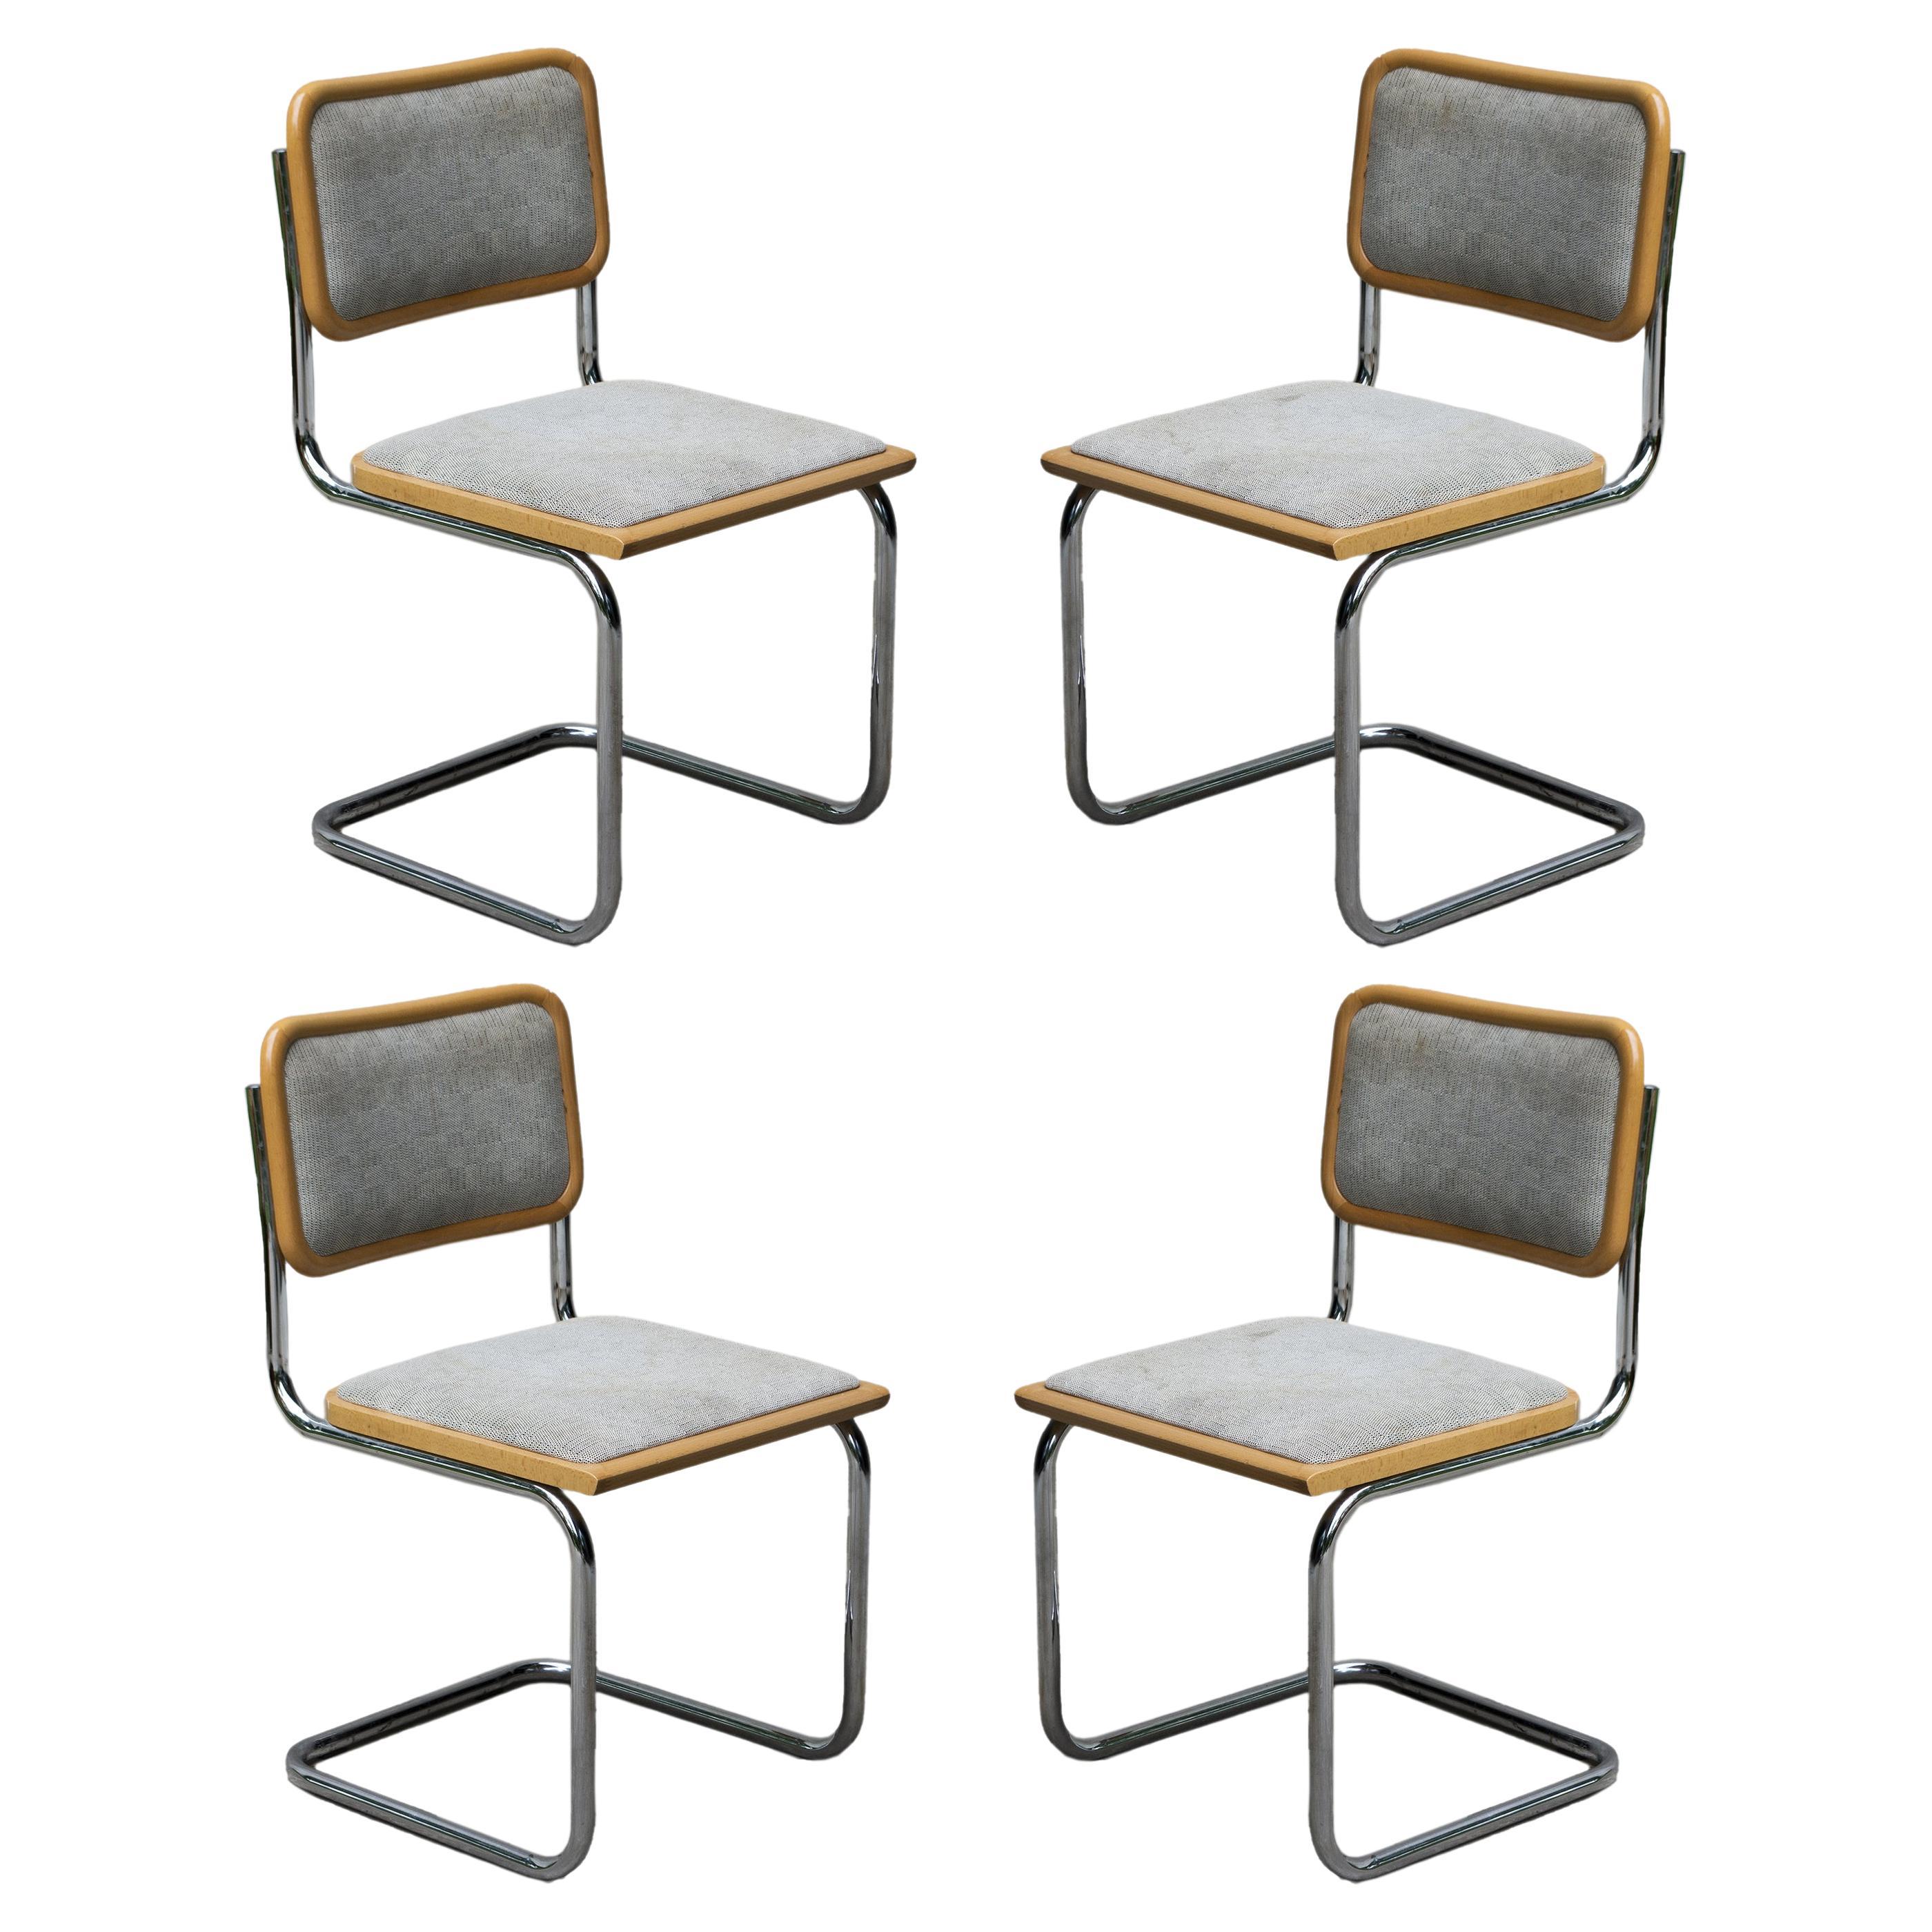 A set of 4 Marcel Breuer Cesca Chairs